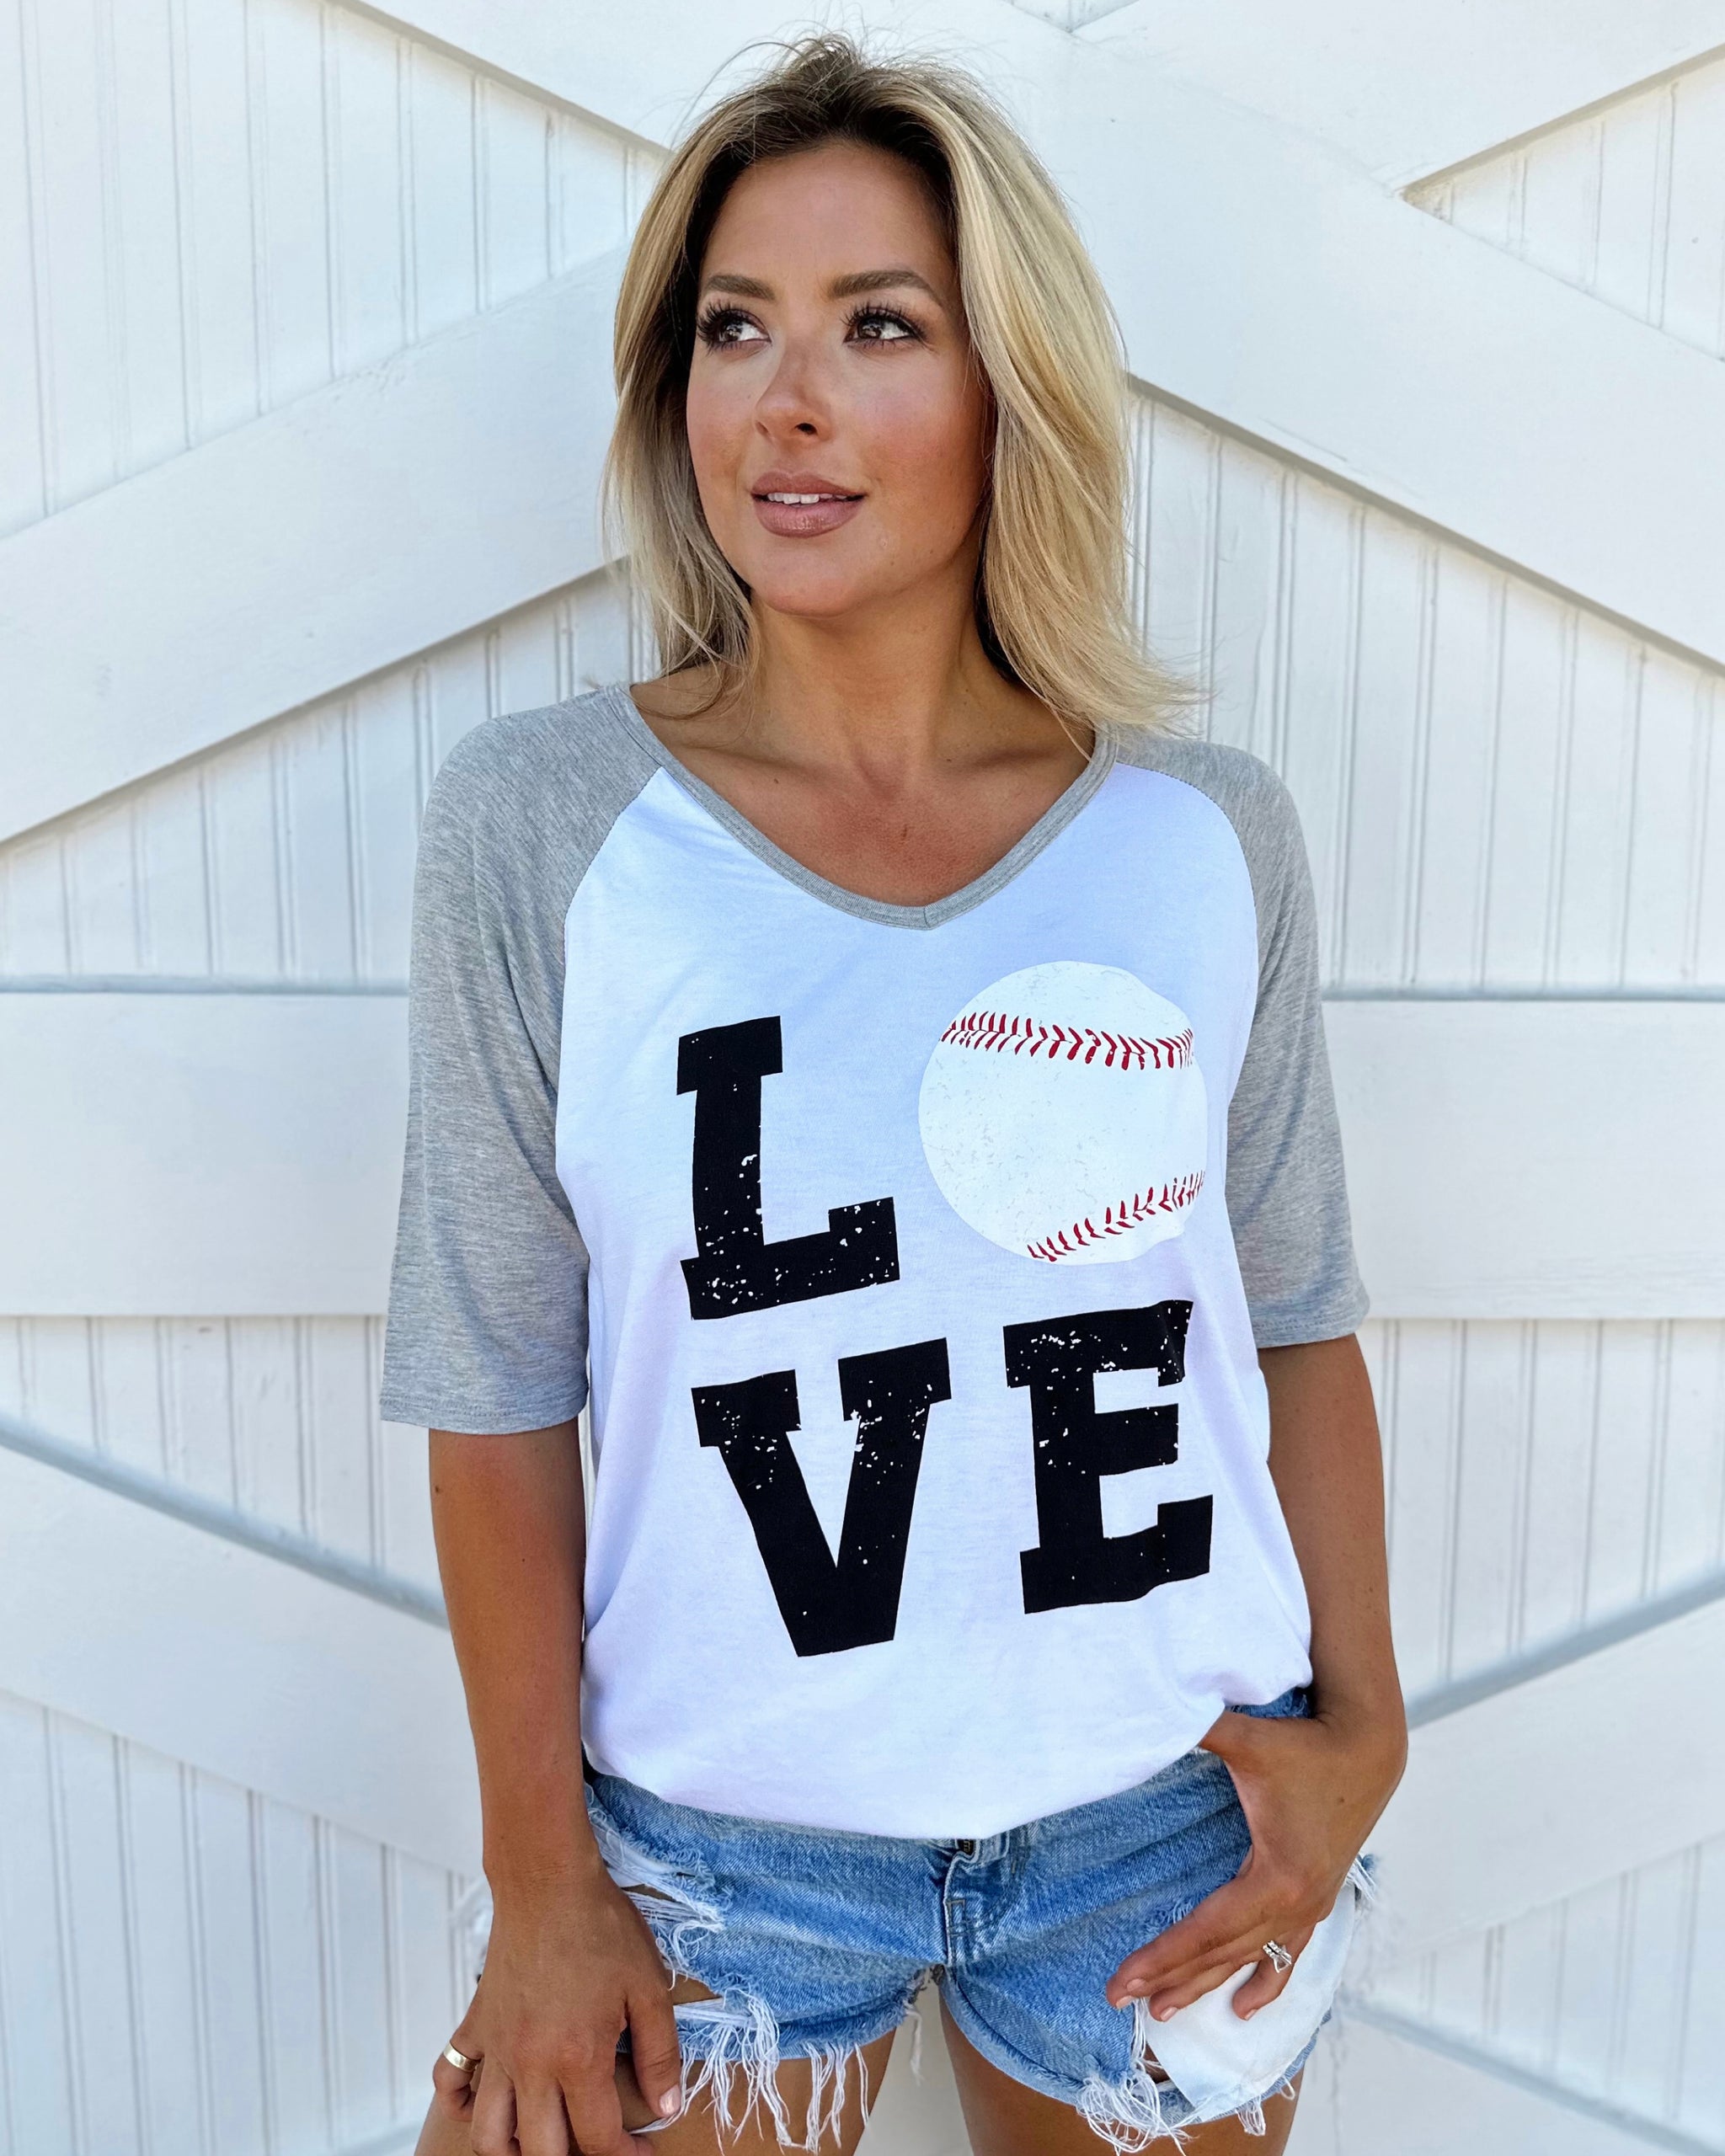 I Love Baseball | Yankees | Women's T-Shirt Heather Grey / L